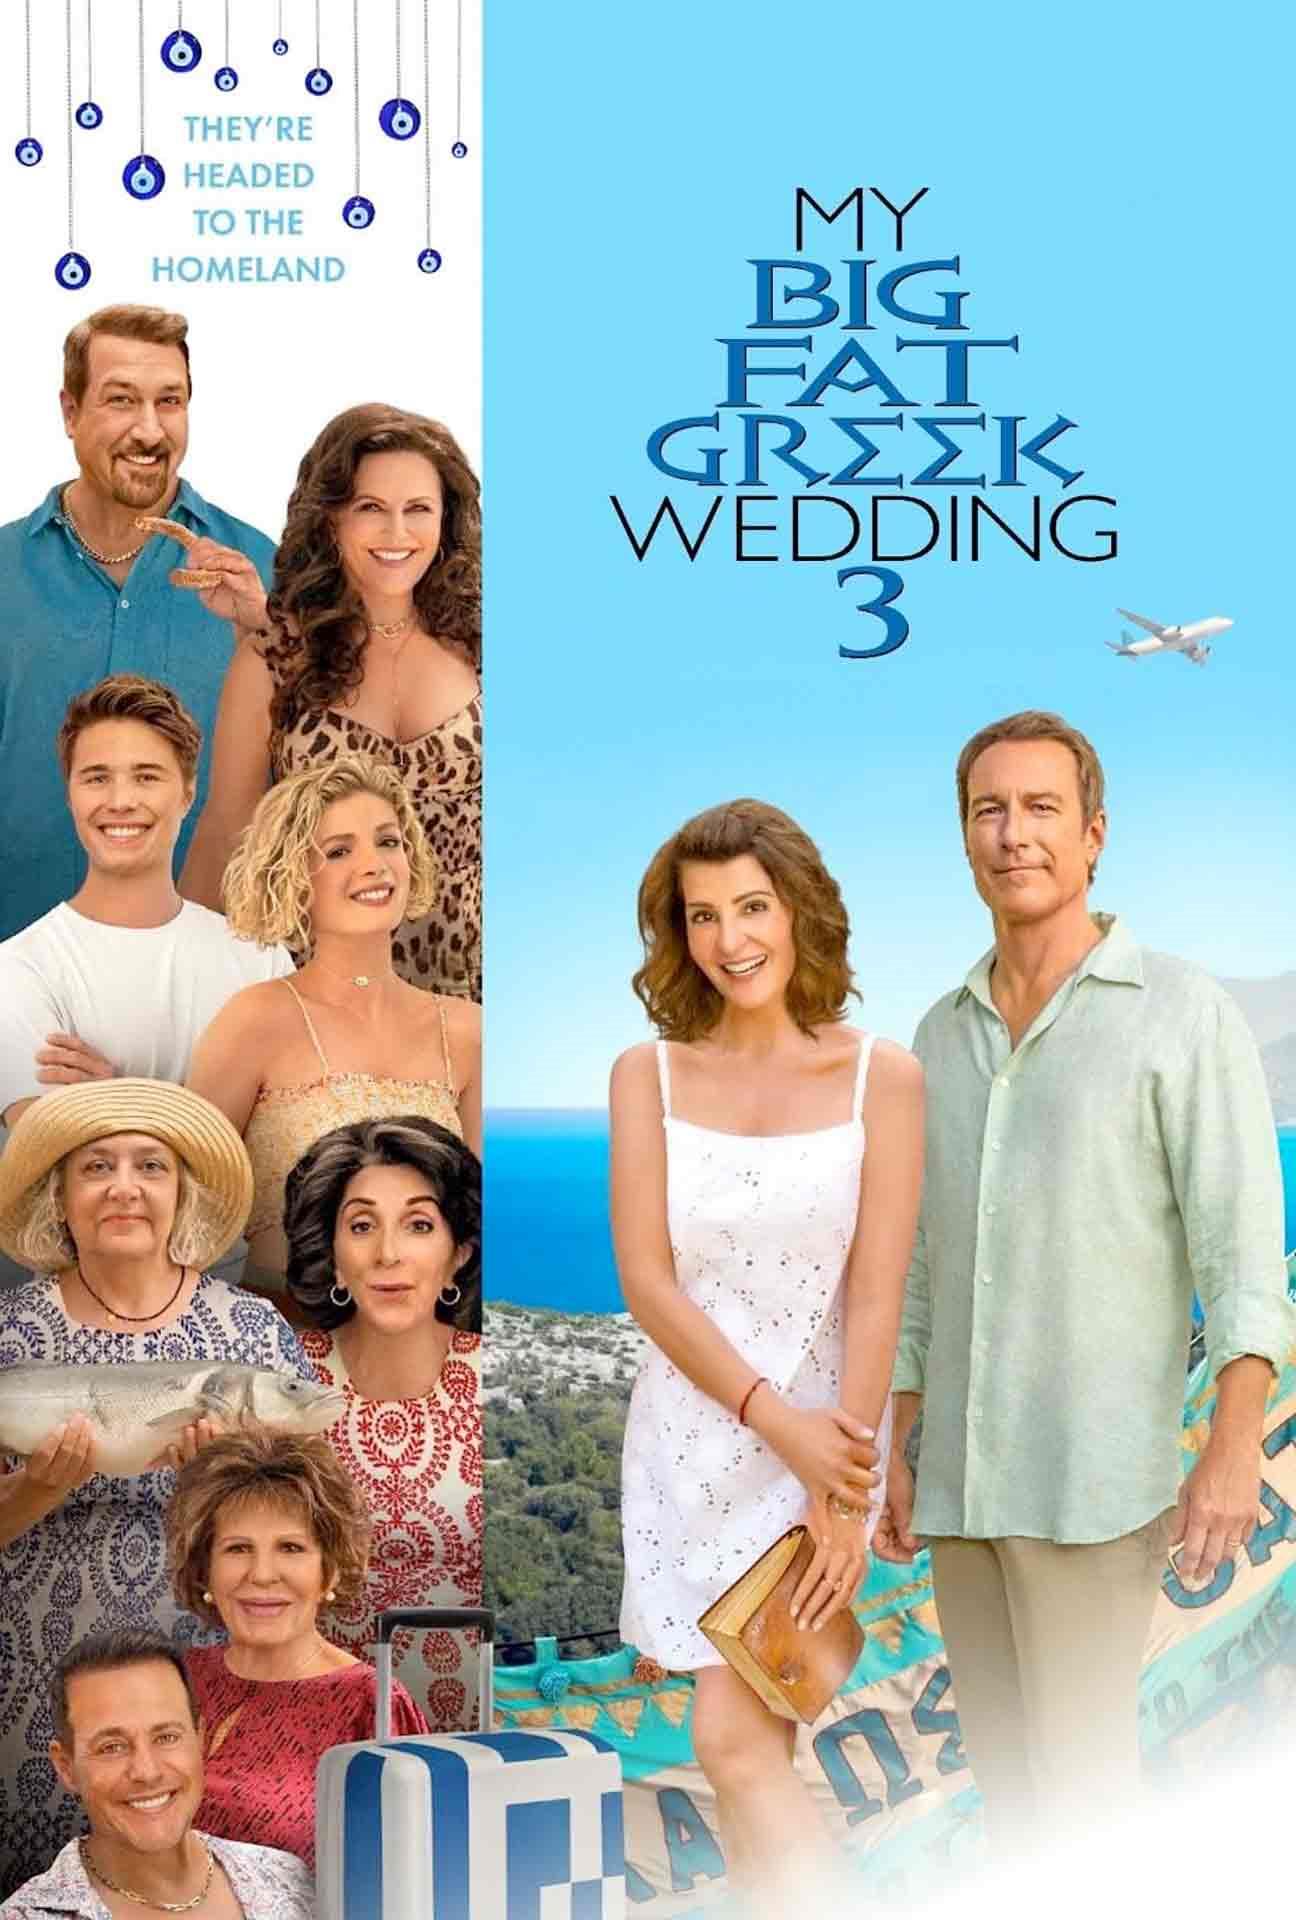 Movie Poster for My Big Fat Greek Wedding 3